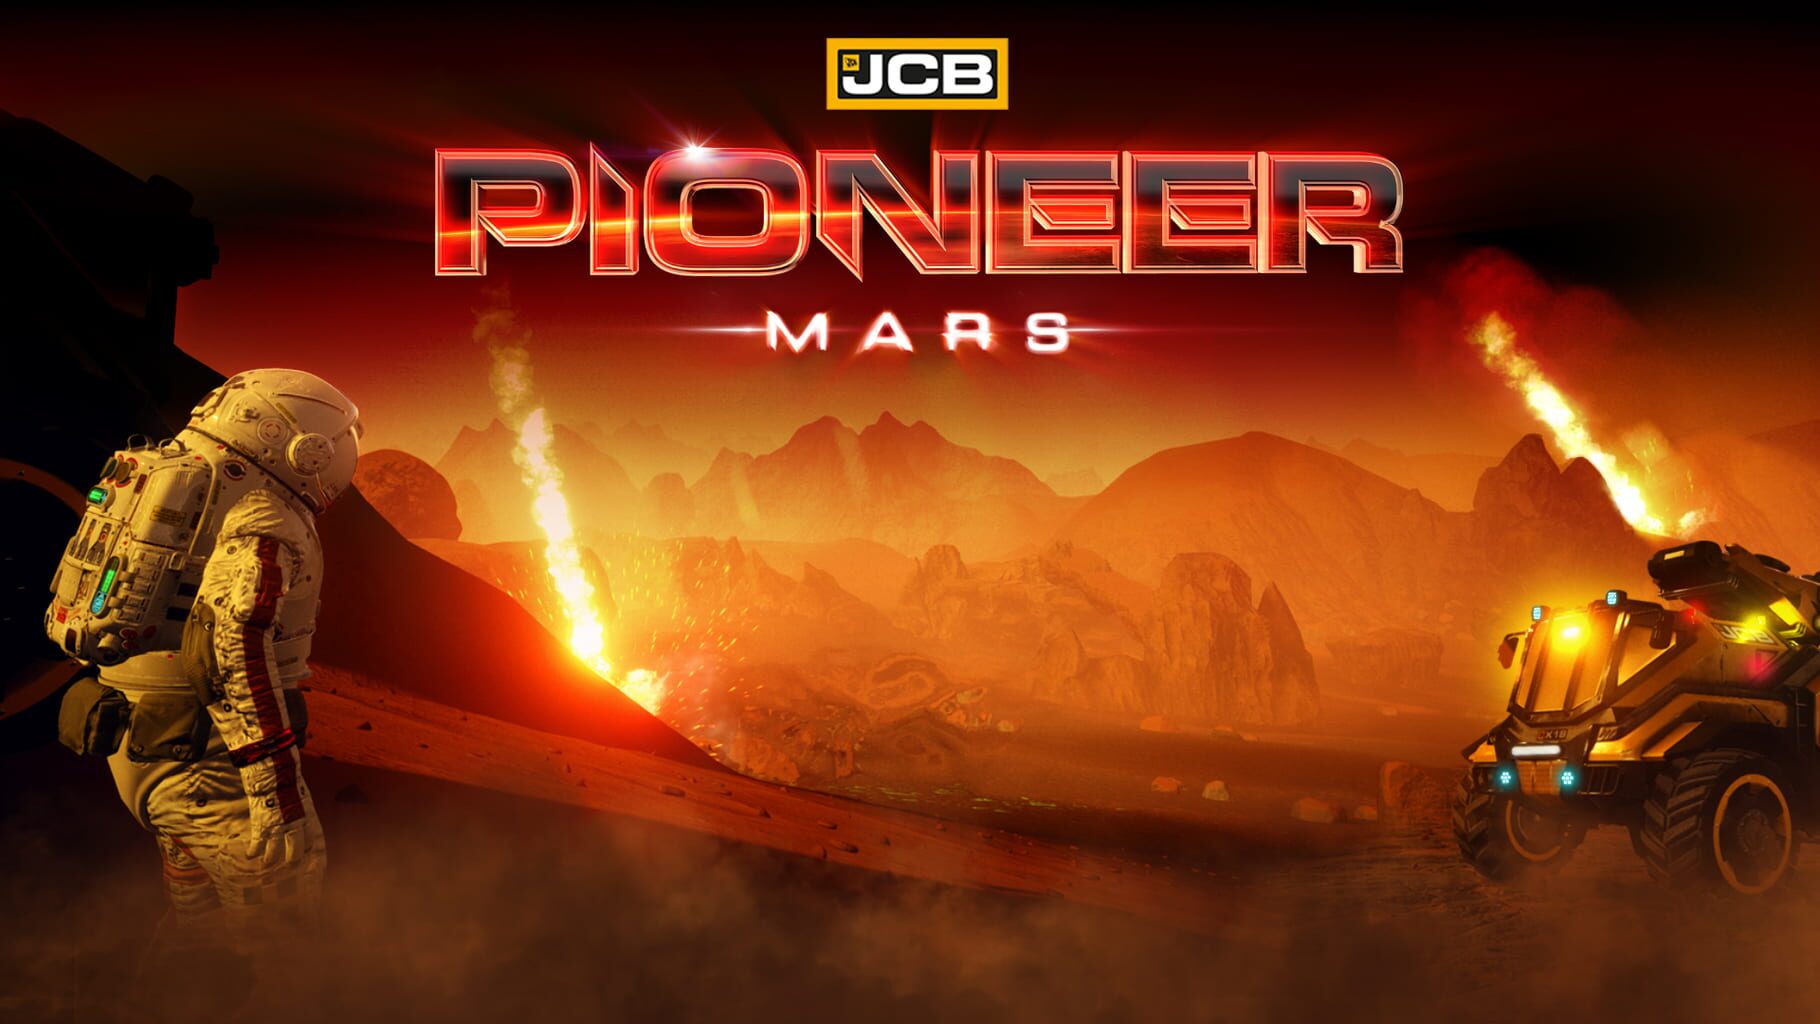 JCB Pioneer: Mars artwork